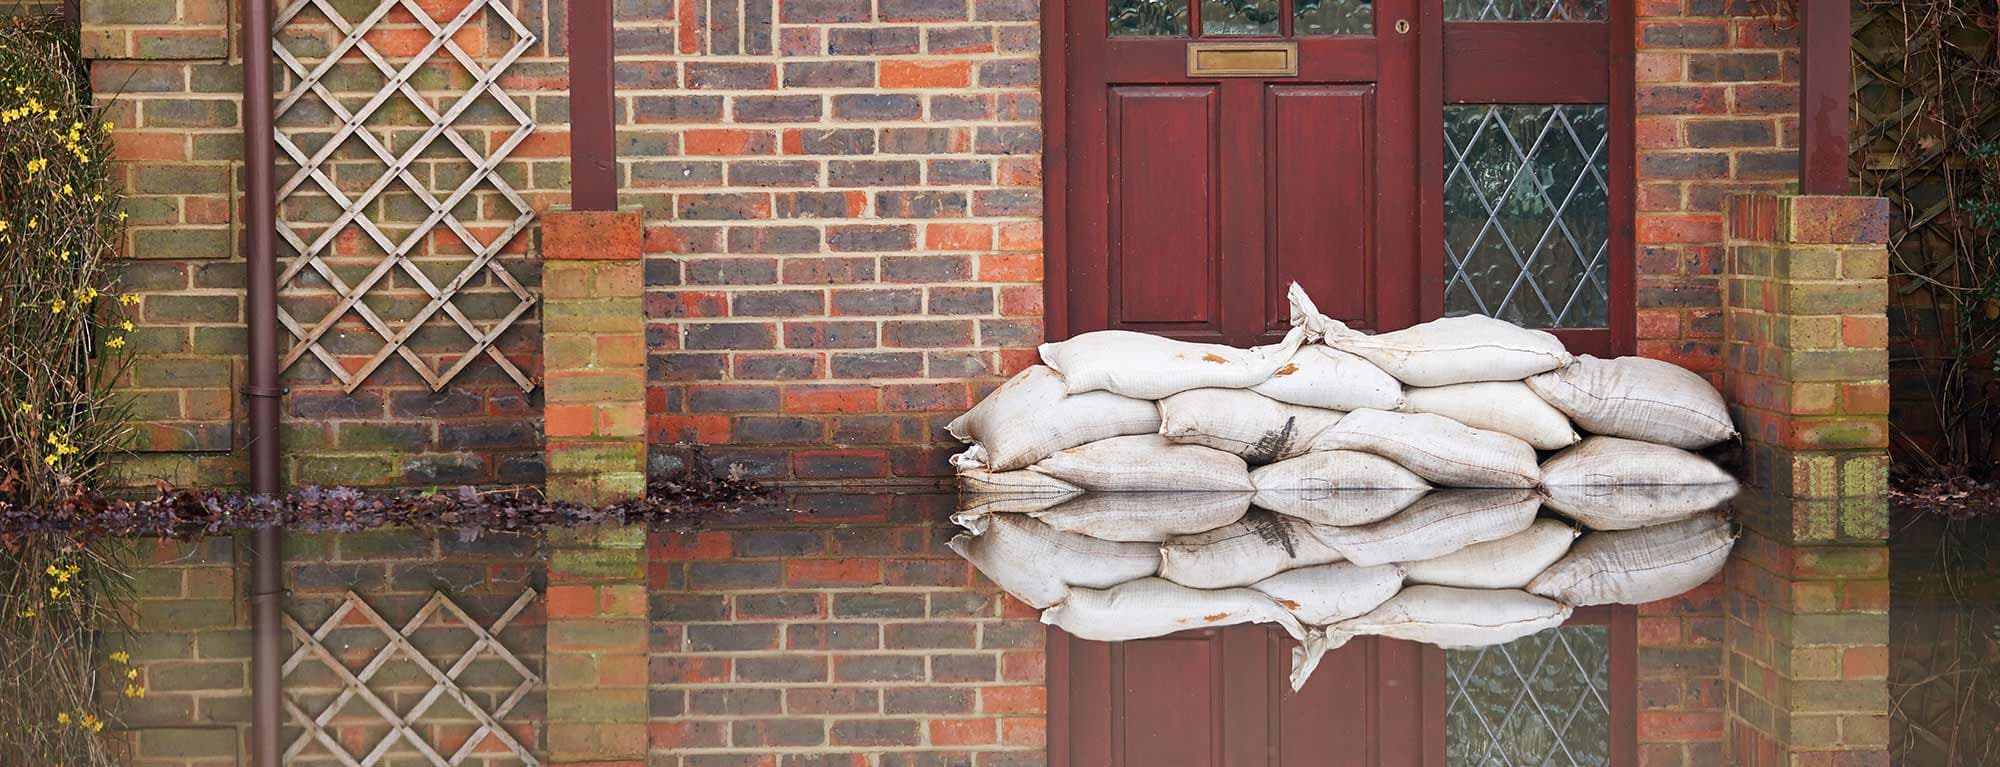 Insurance Market, Flooding devastation